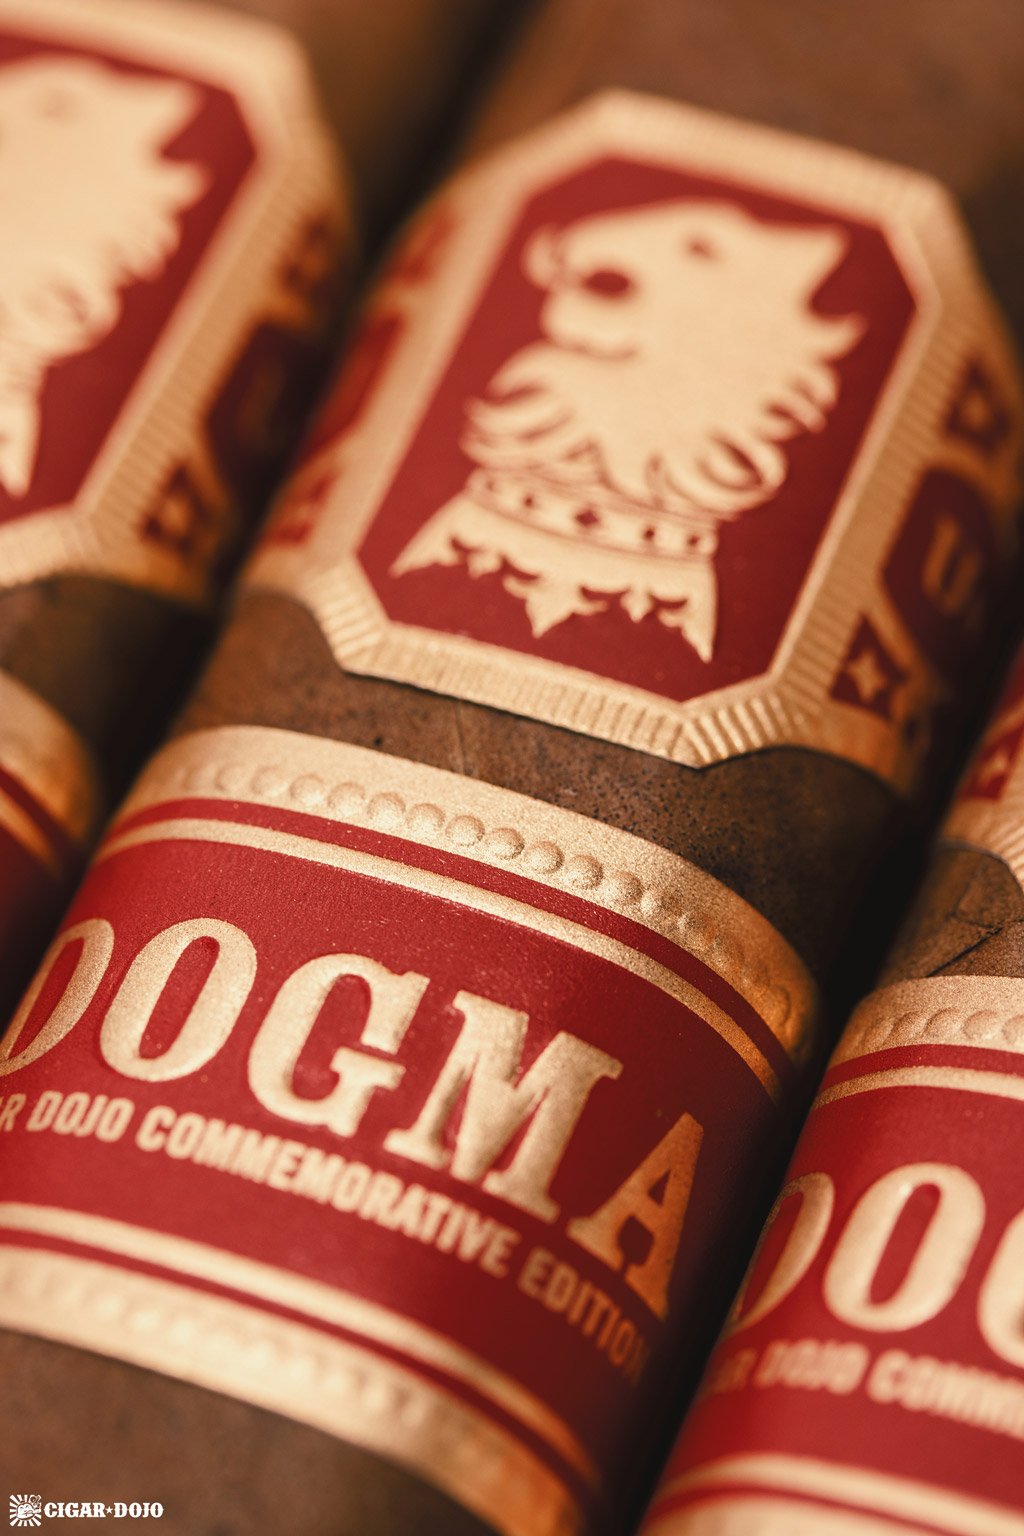 Drew Estate Undercrown Dogma Sun Grown cigars in box closeup